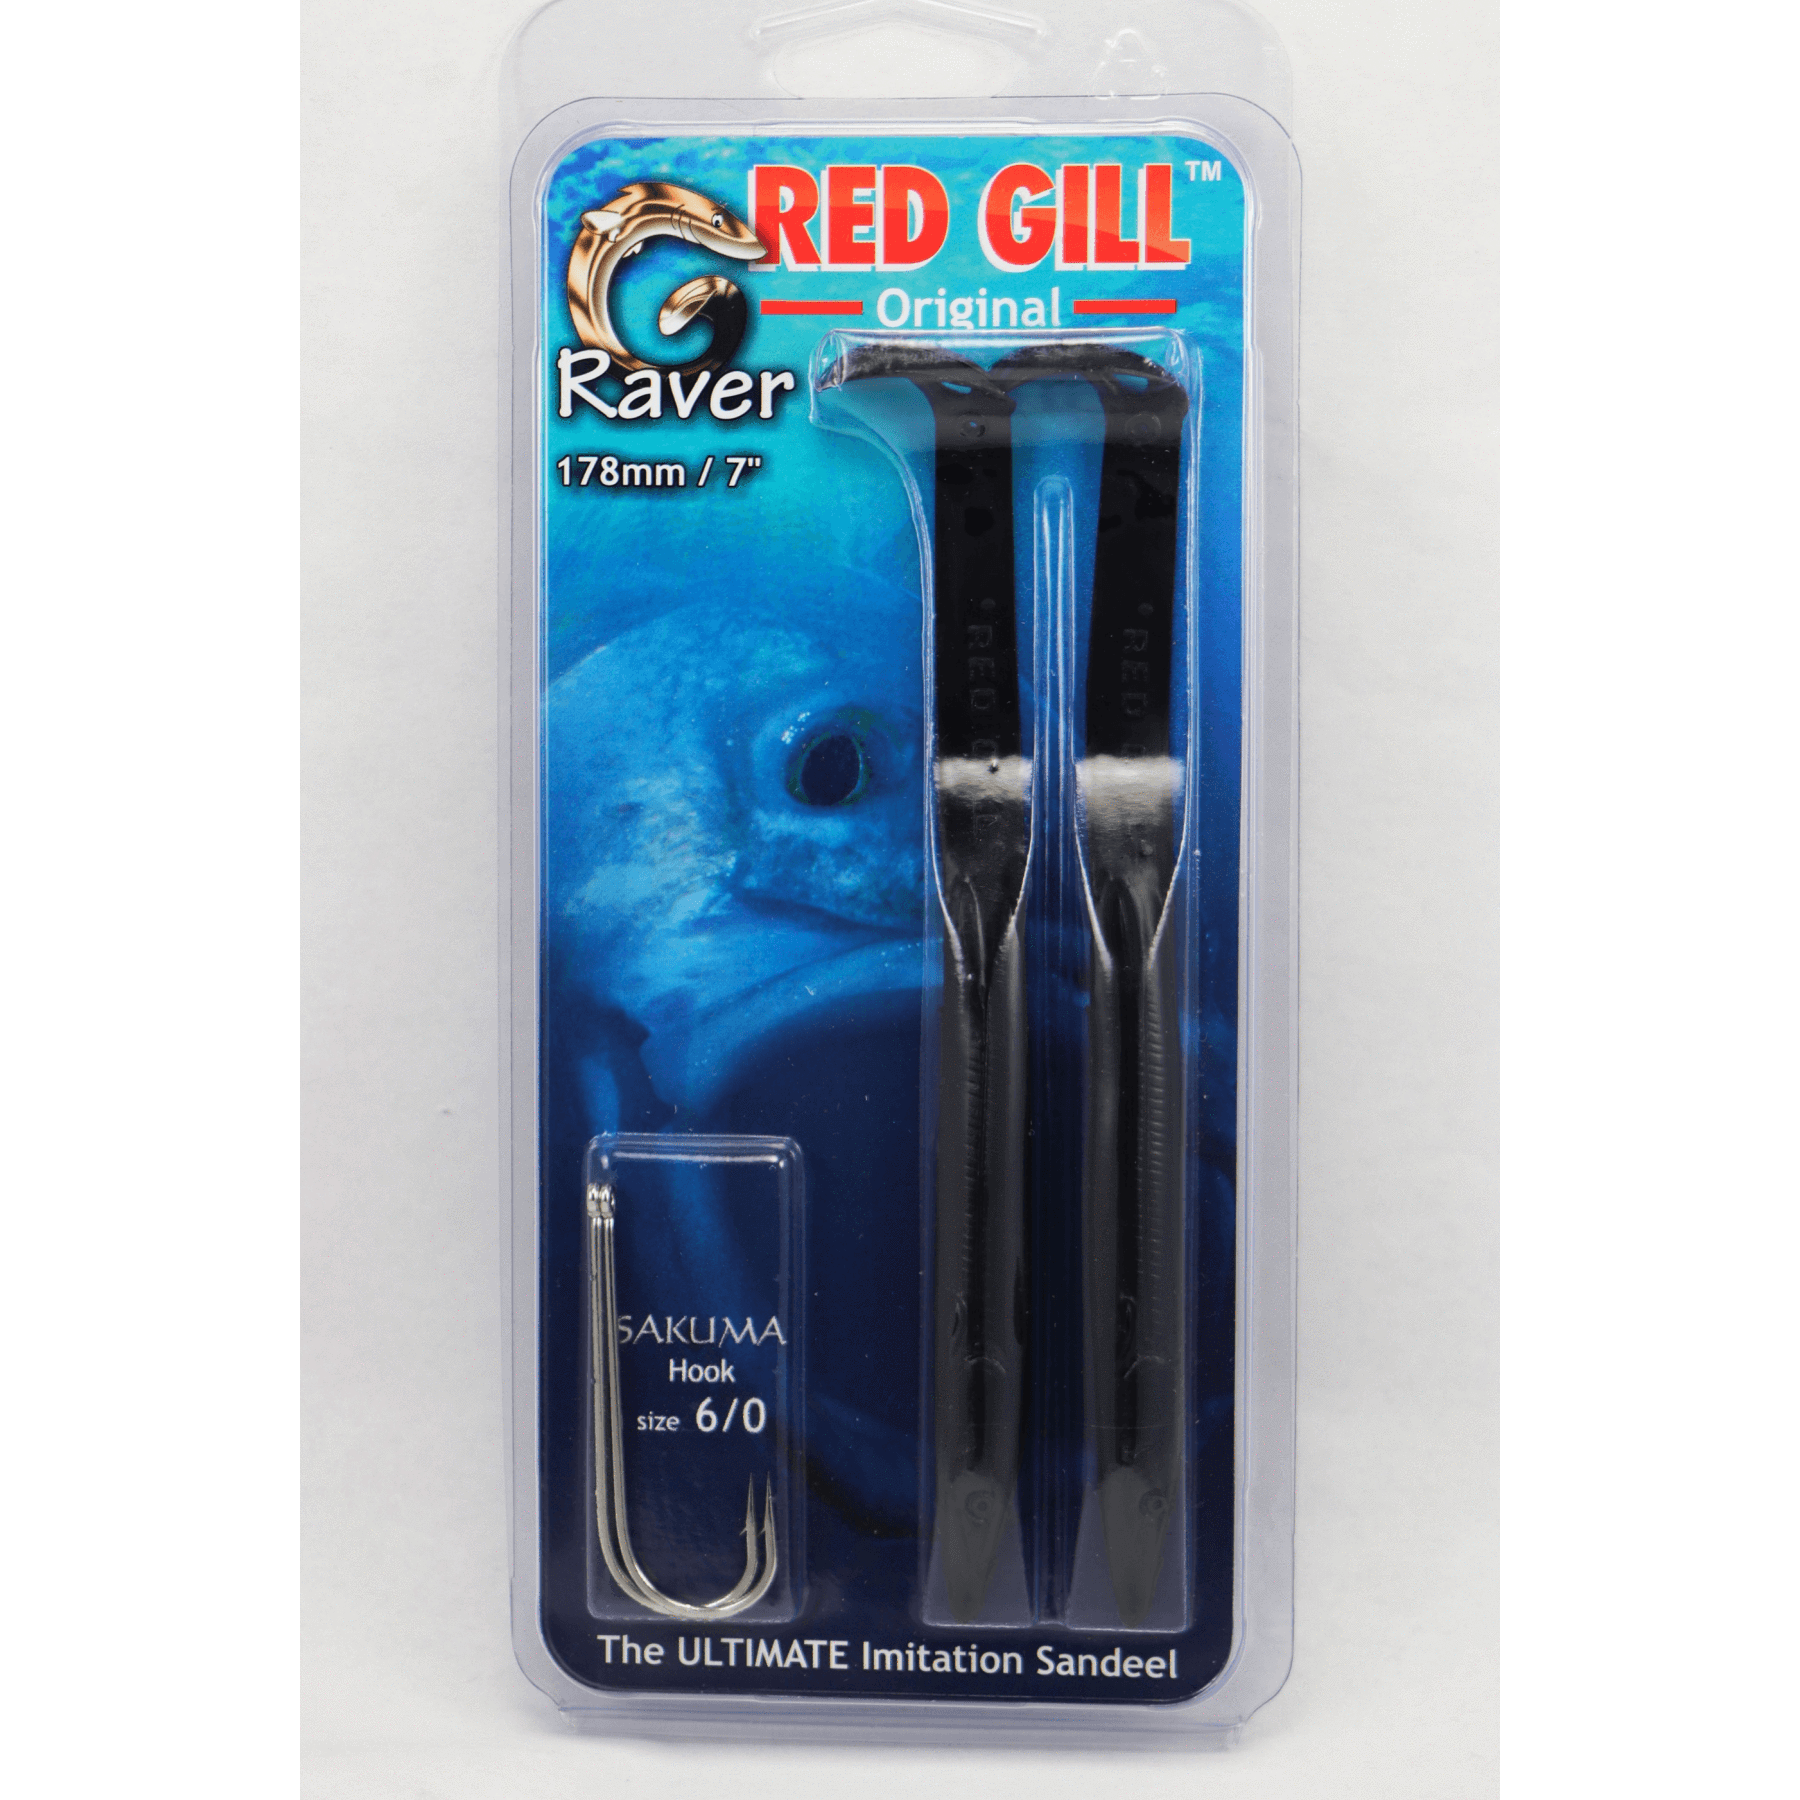 Red Gill Original - Raver 178mm Black